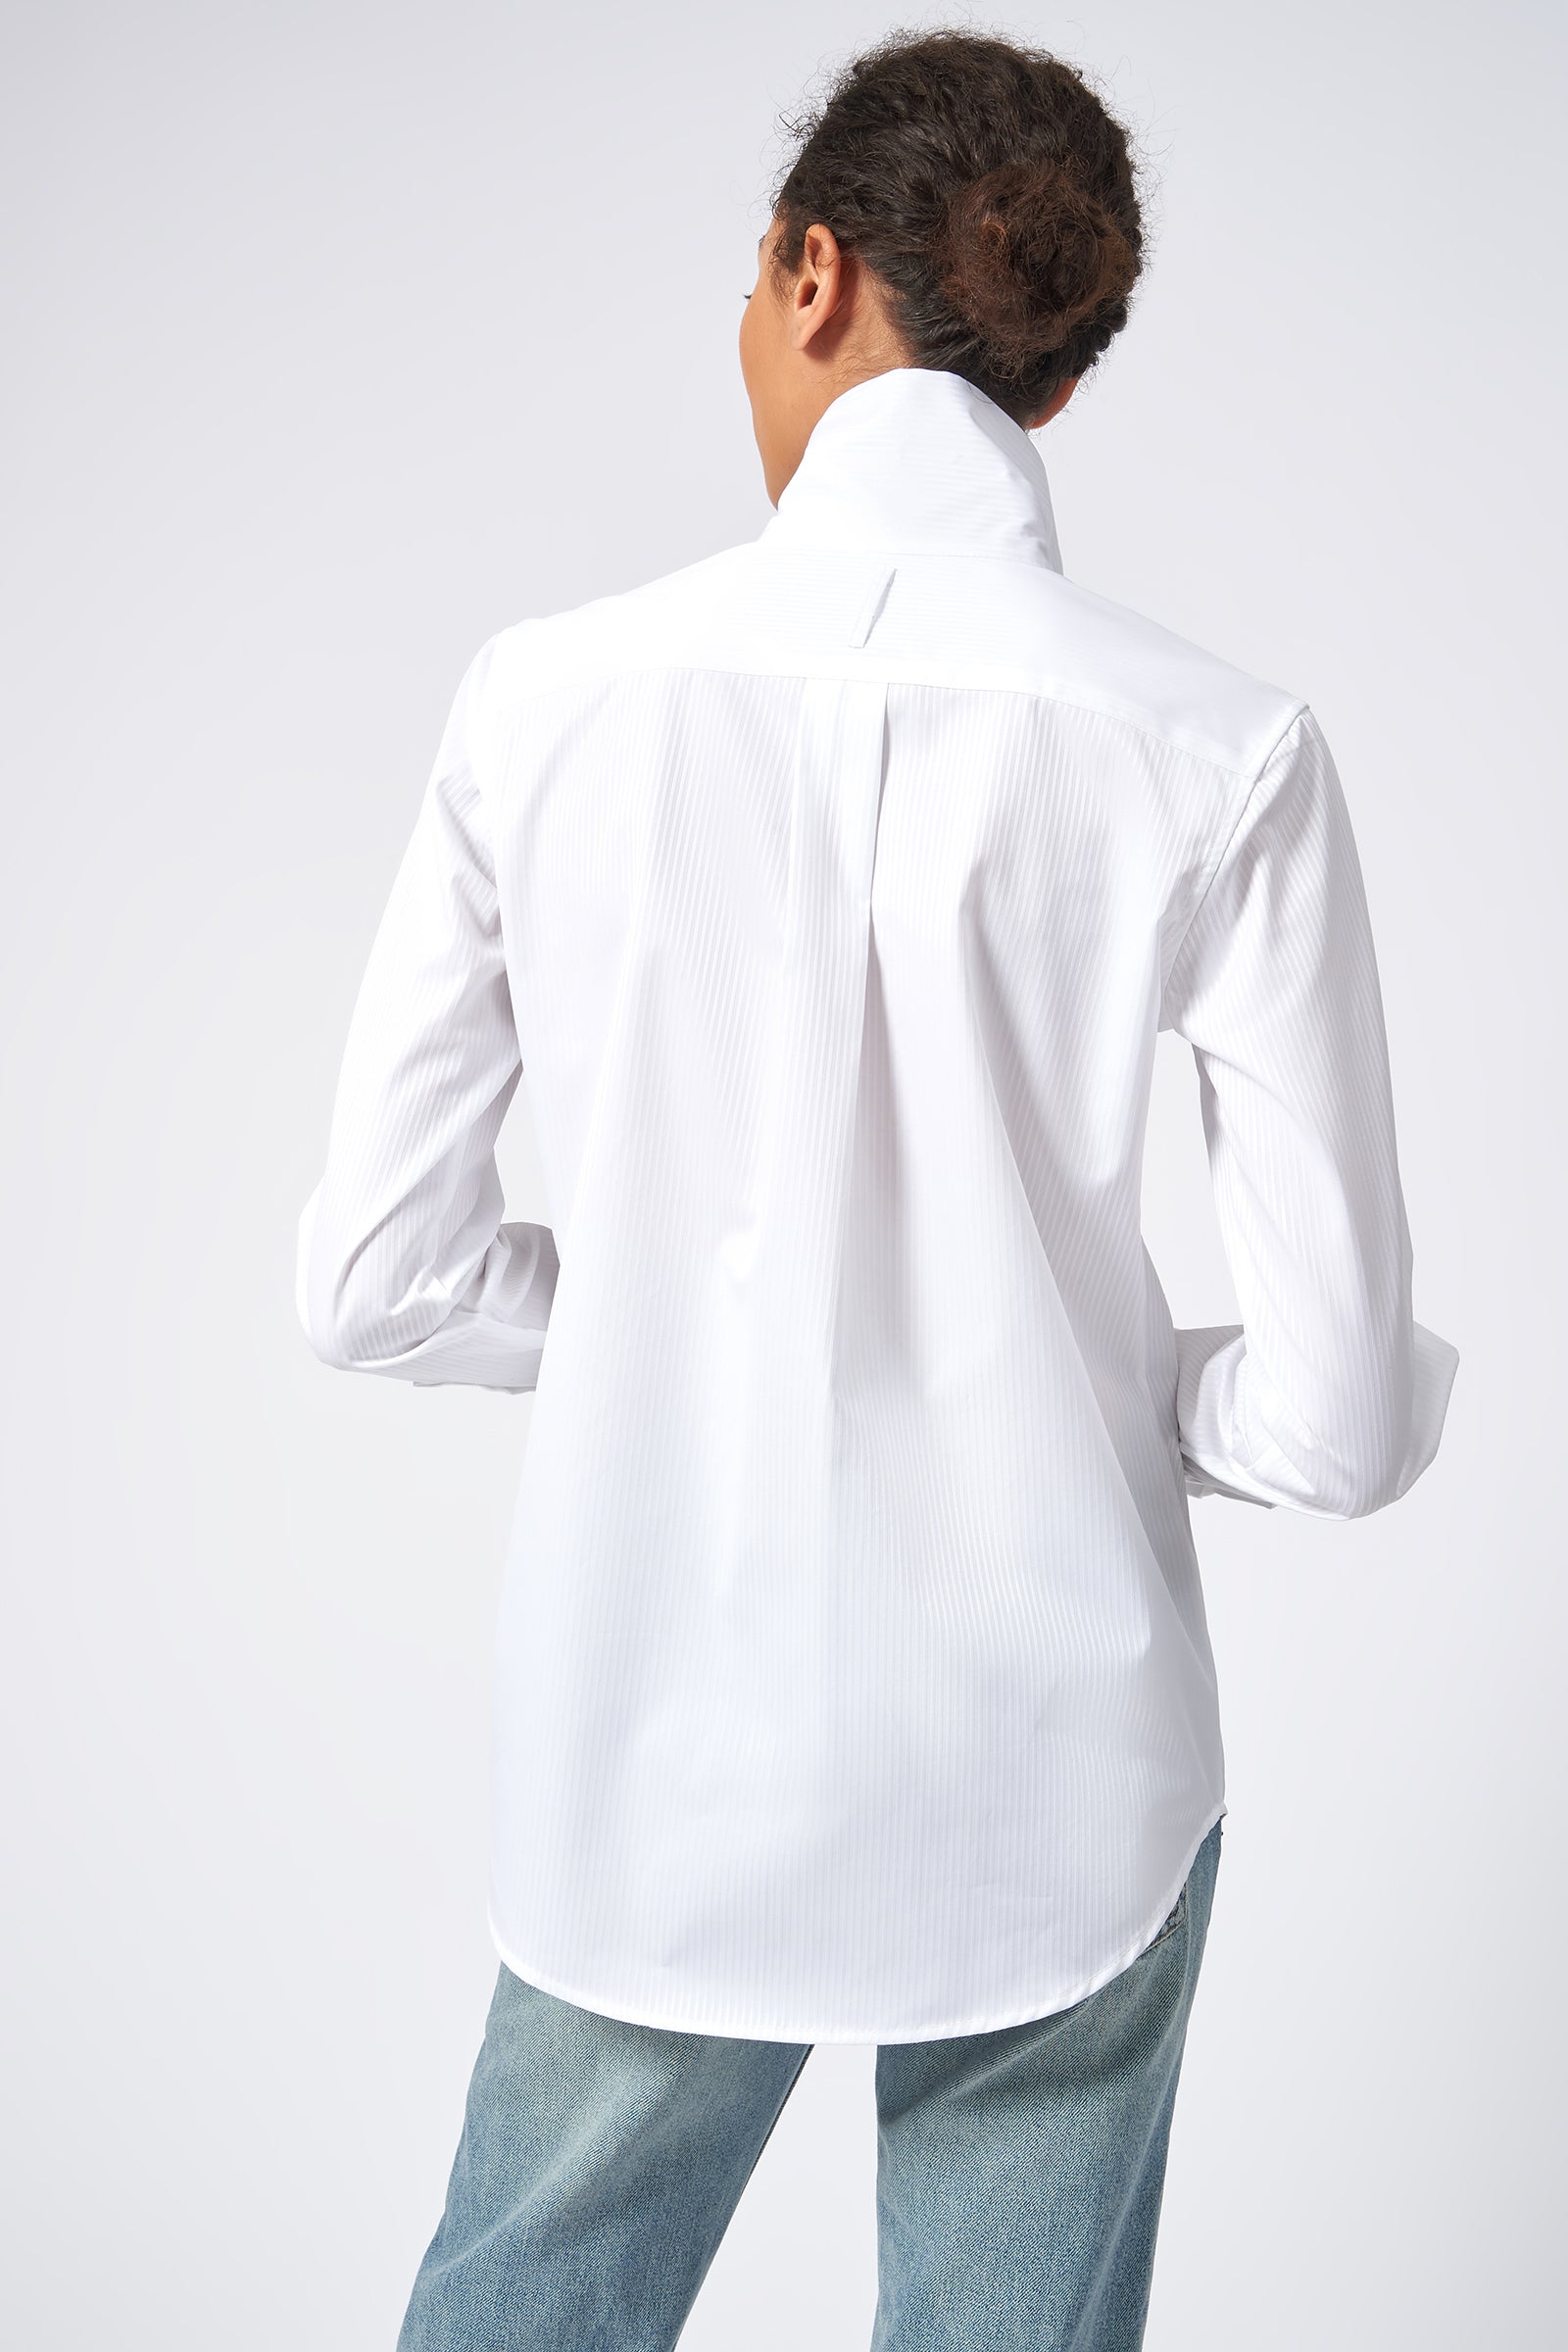 Kal Rieman Box Pleat Ginna Tailored Shirt in White Satin Stripe on Model Back Detail View